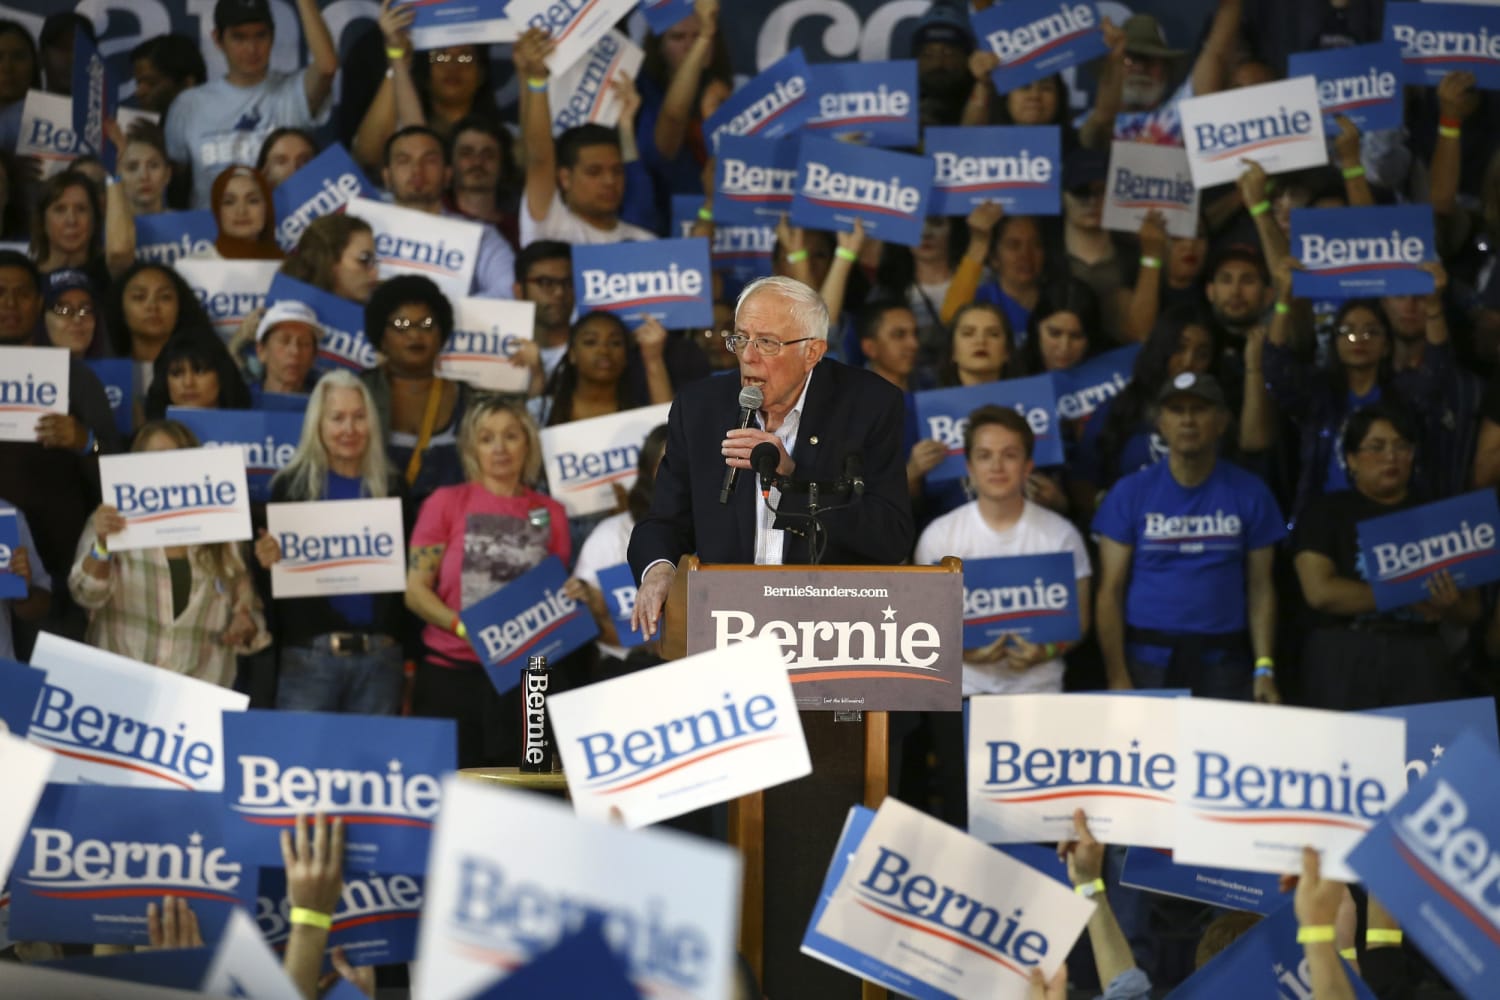 Bernie sanders publicly humiliates candidates